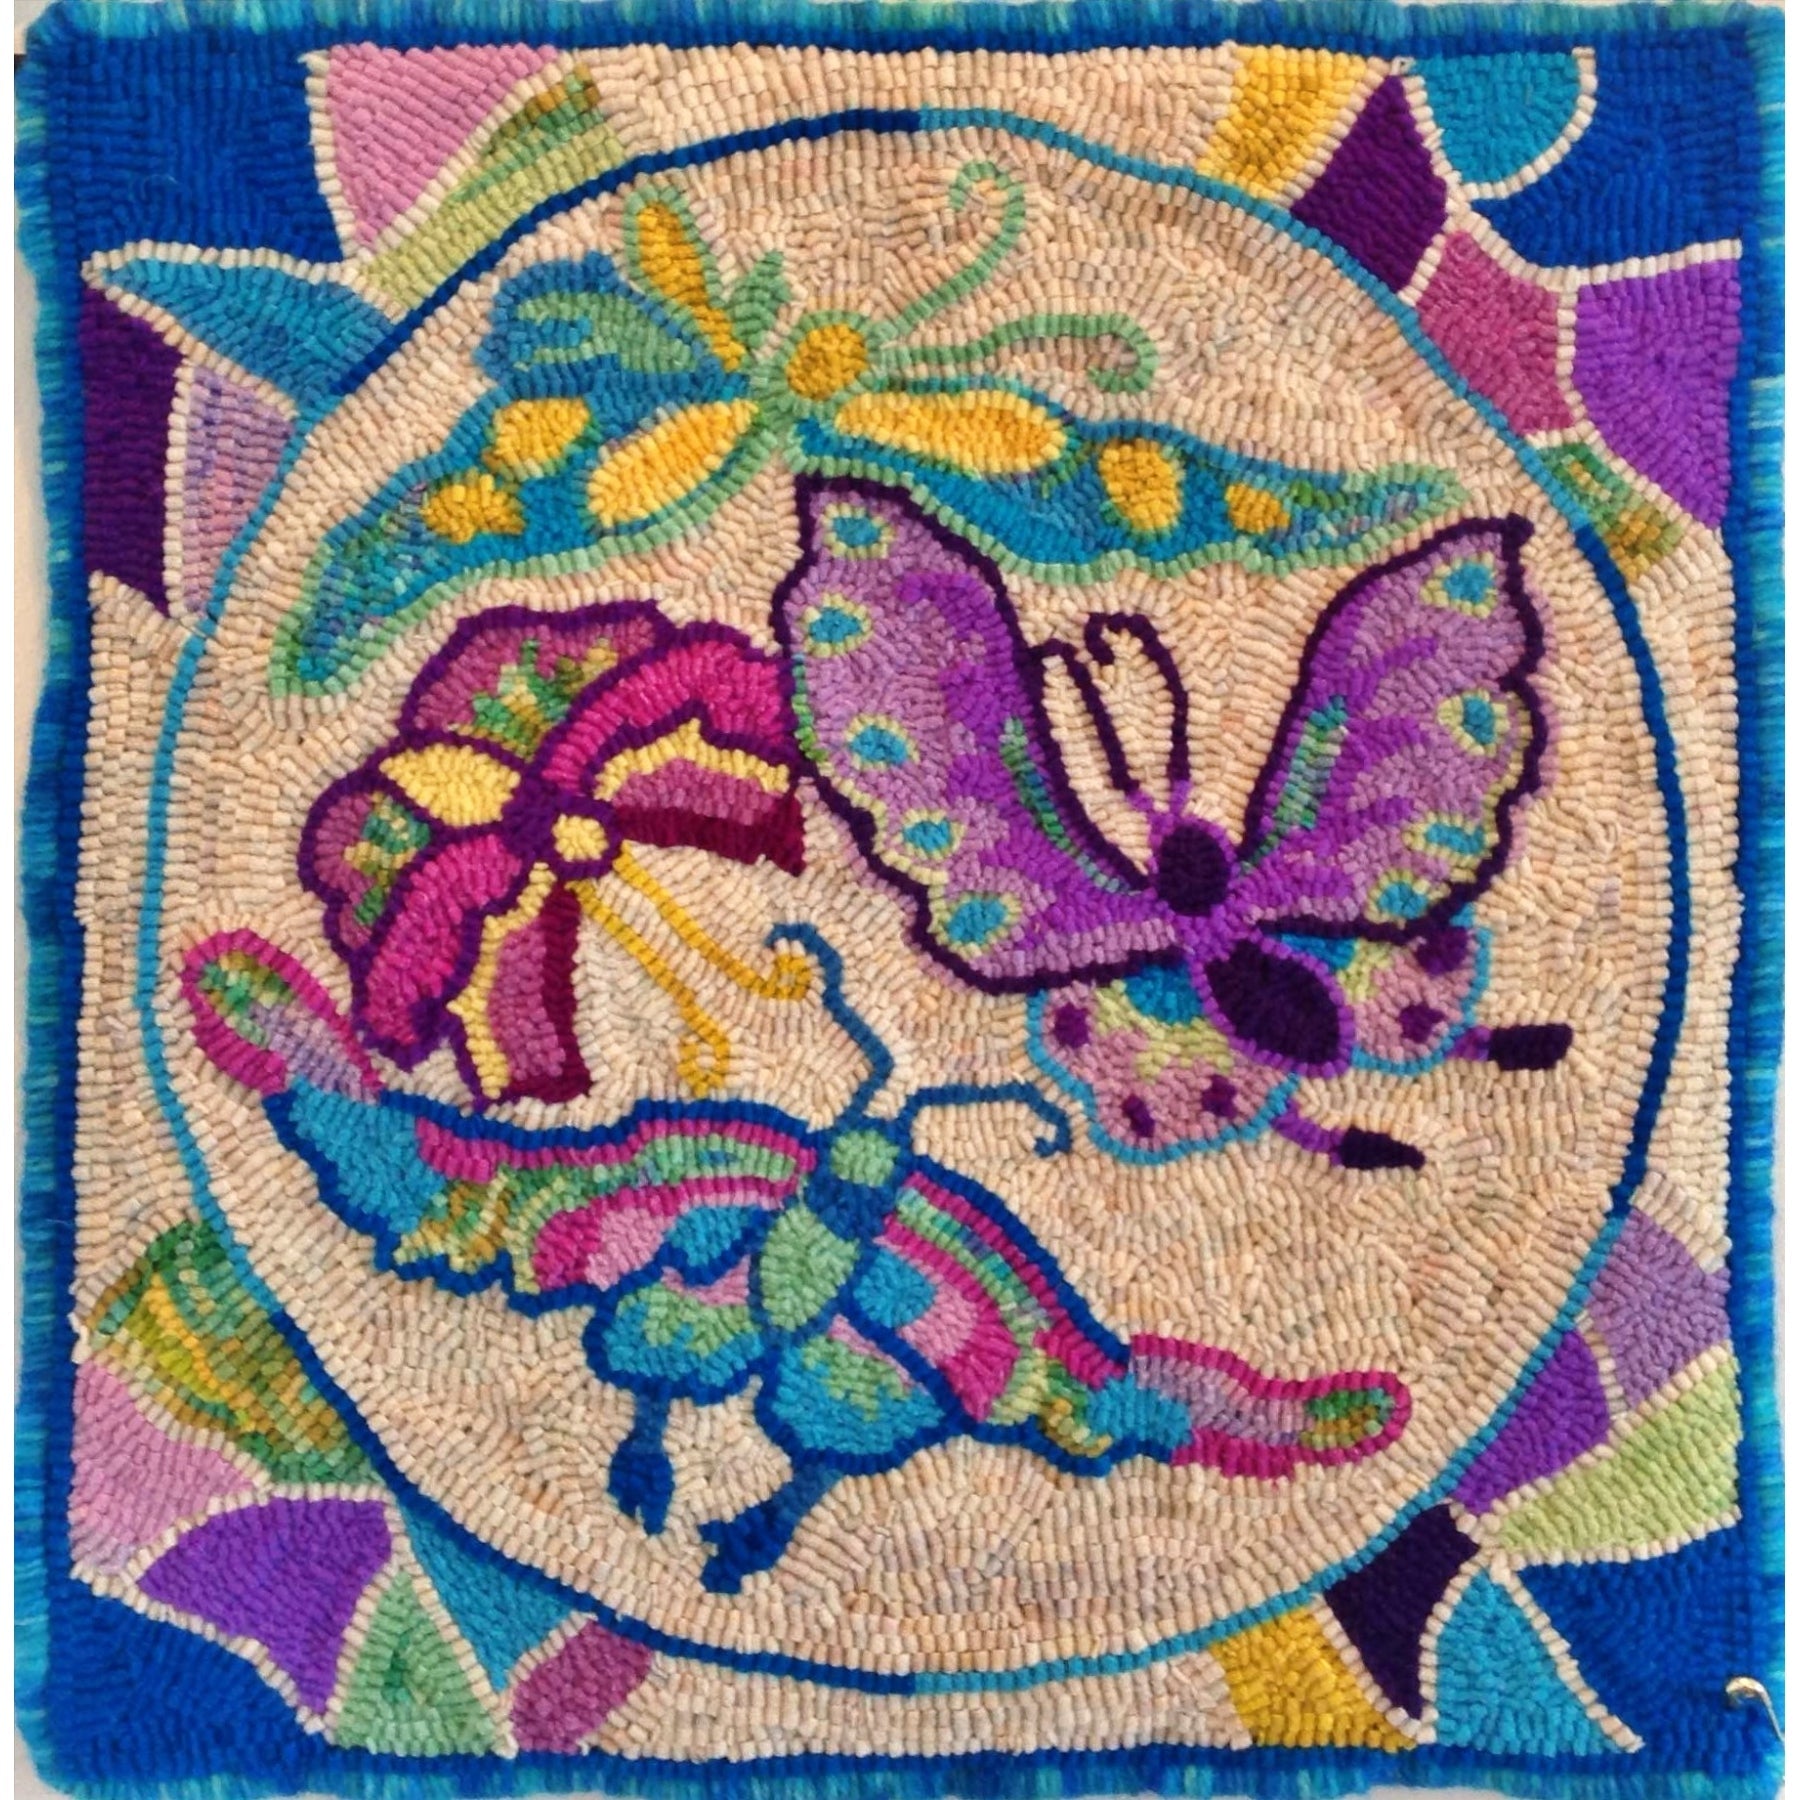 Oriental Butterflies, rug hooked by Vicky Germroth